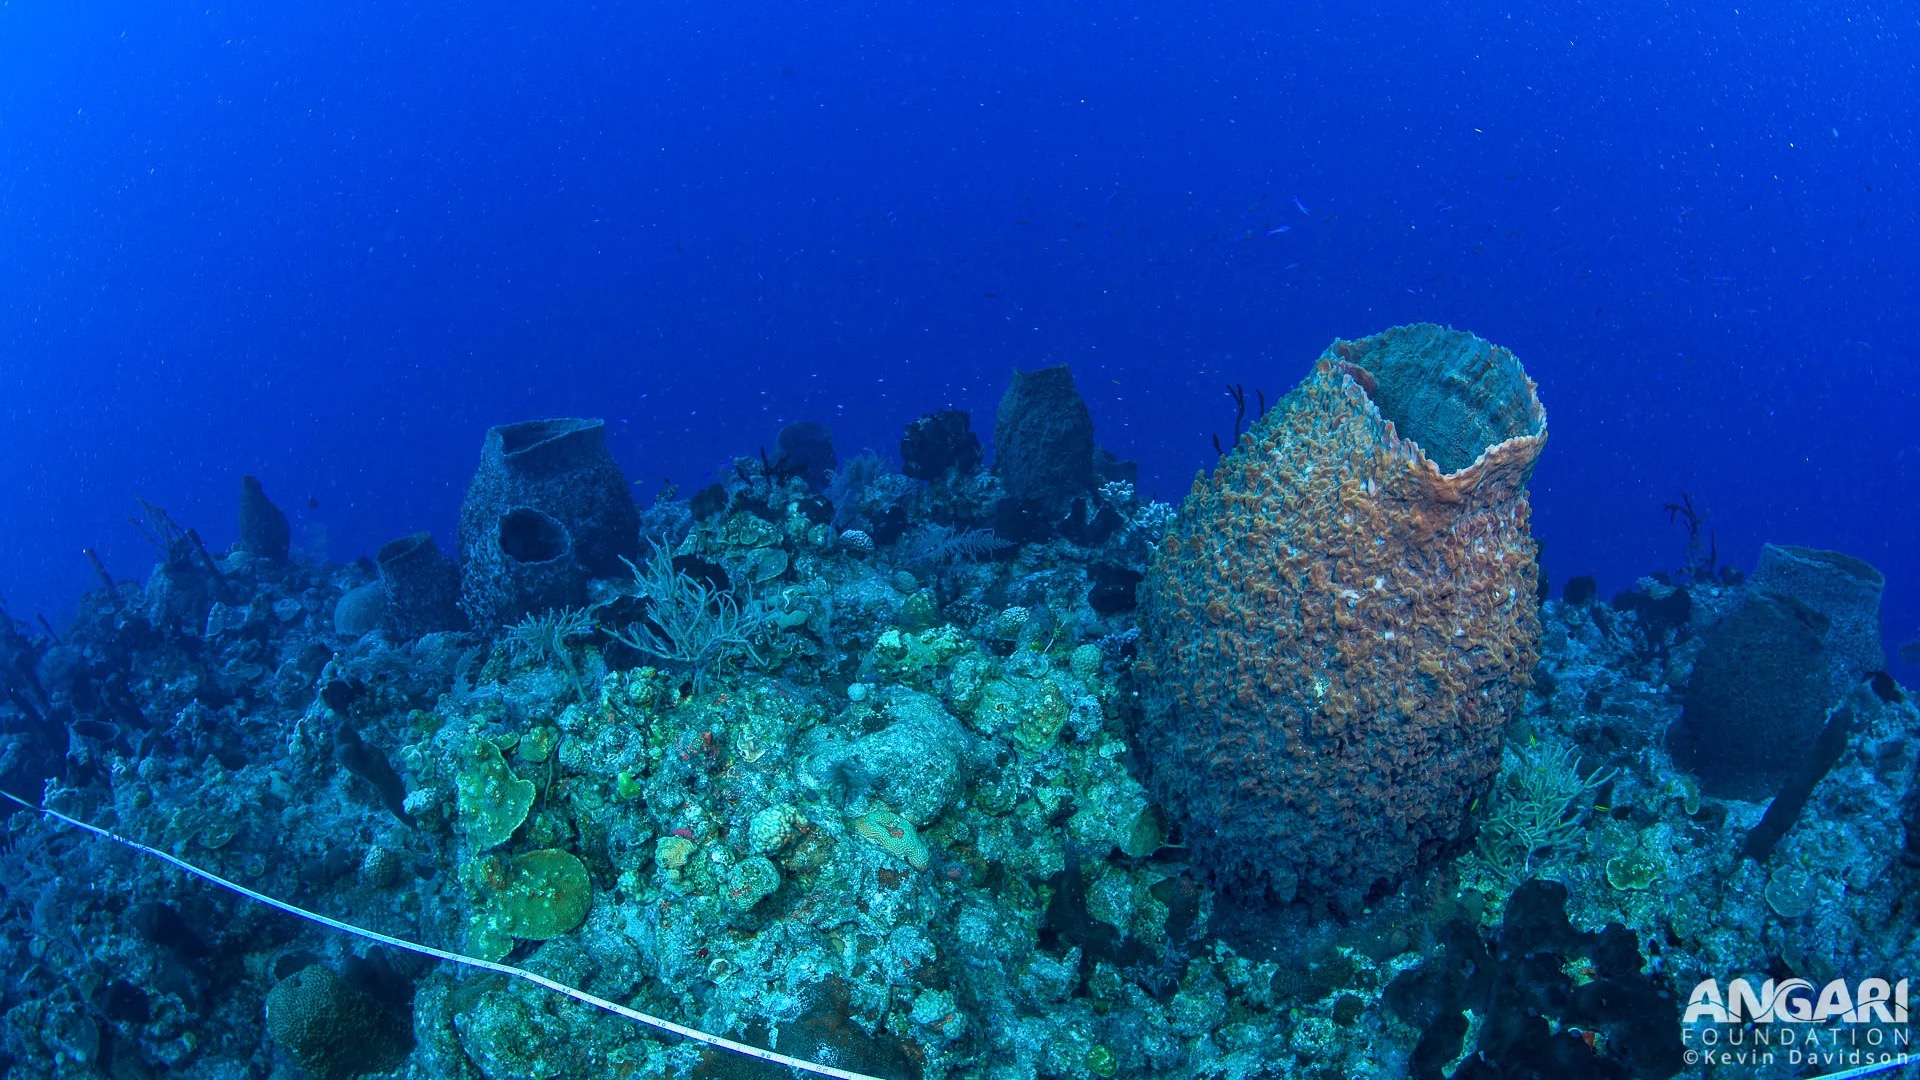 Giant barrel sponges on a reef.